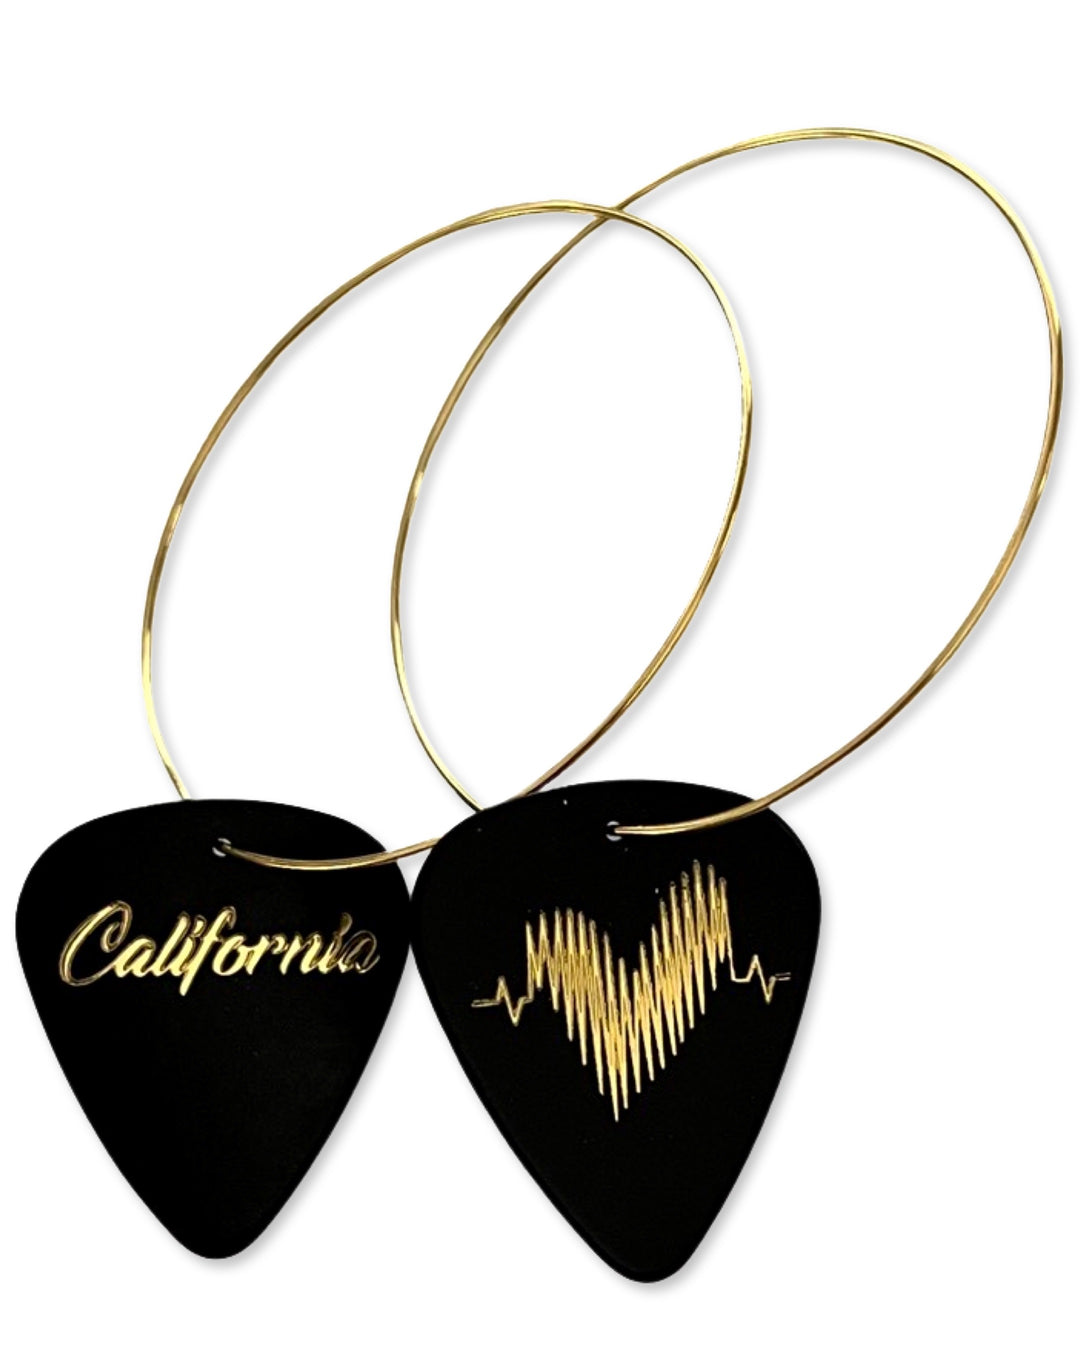 California Black Gold Reversible Single Guitar Pick Earrings